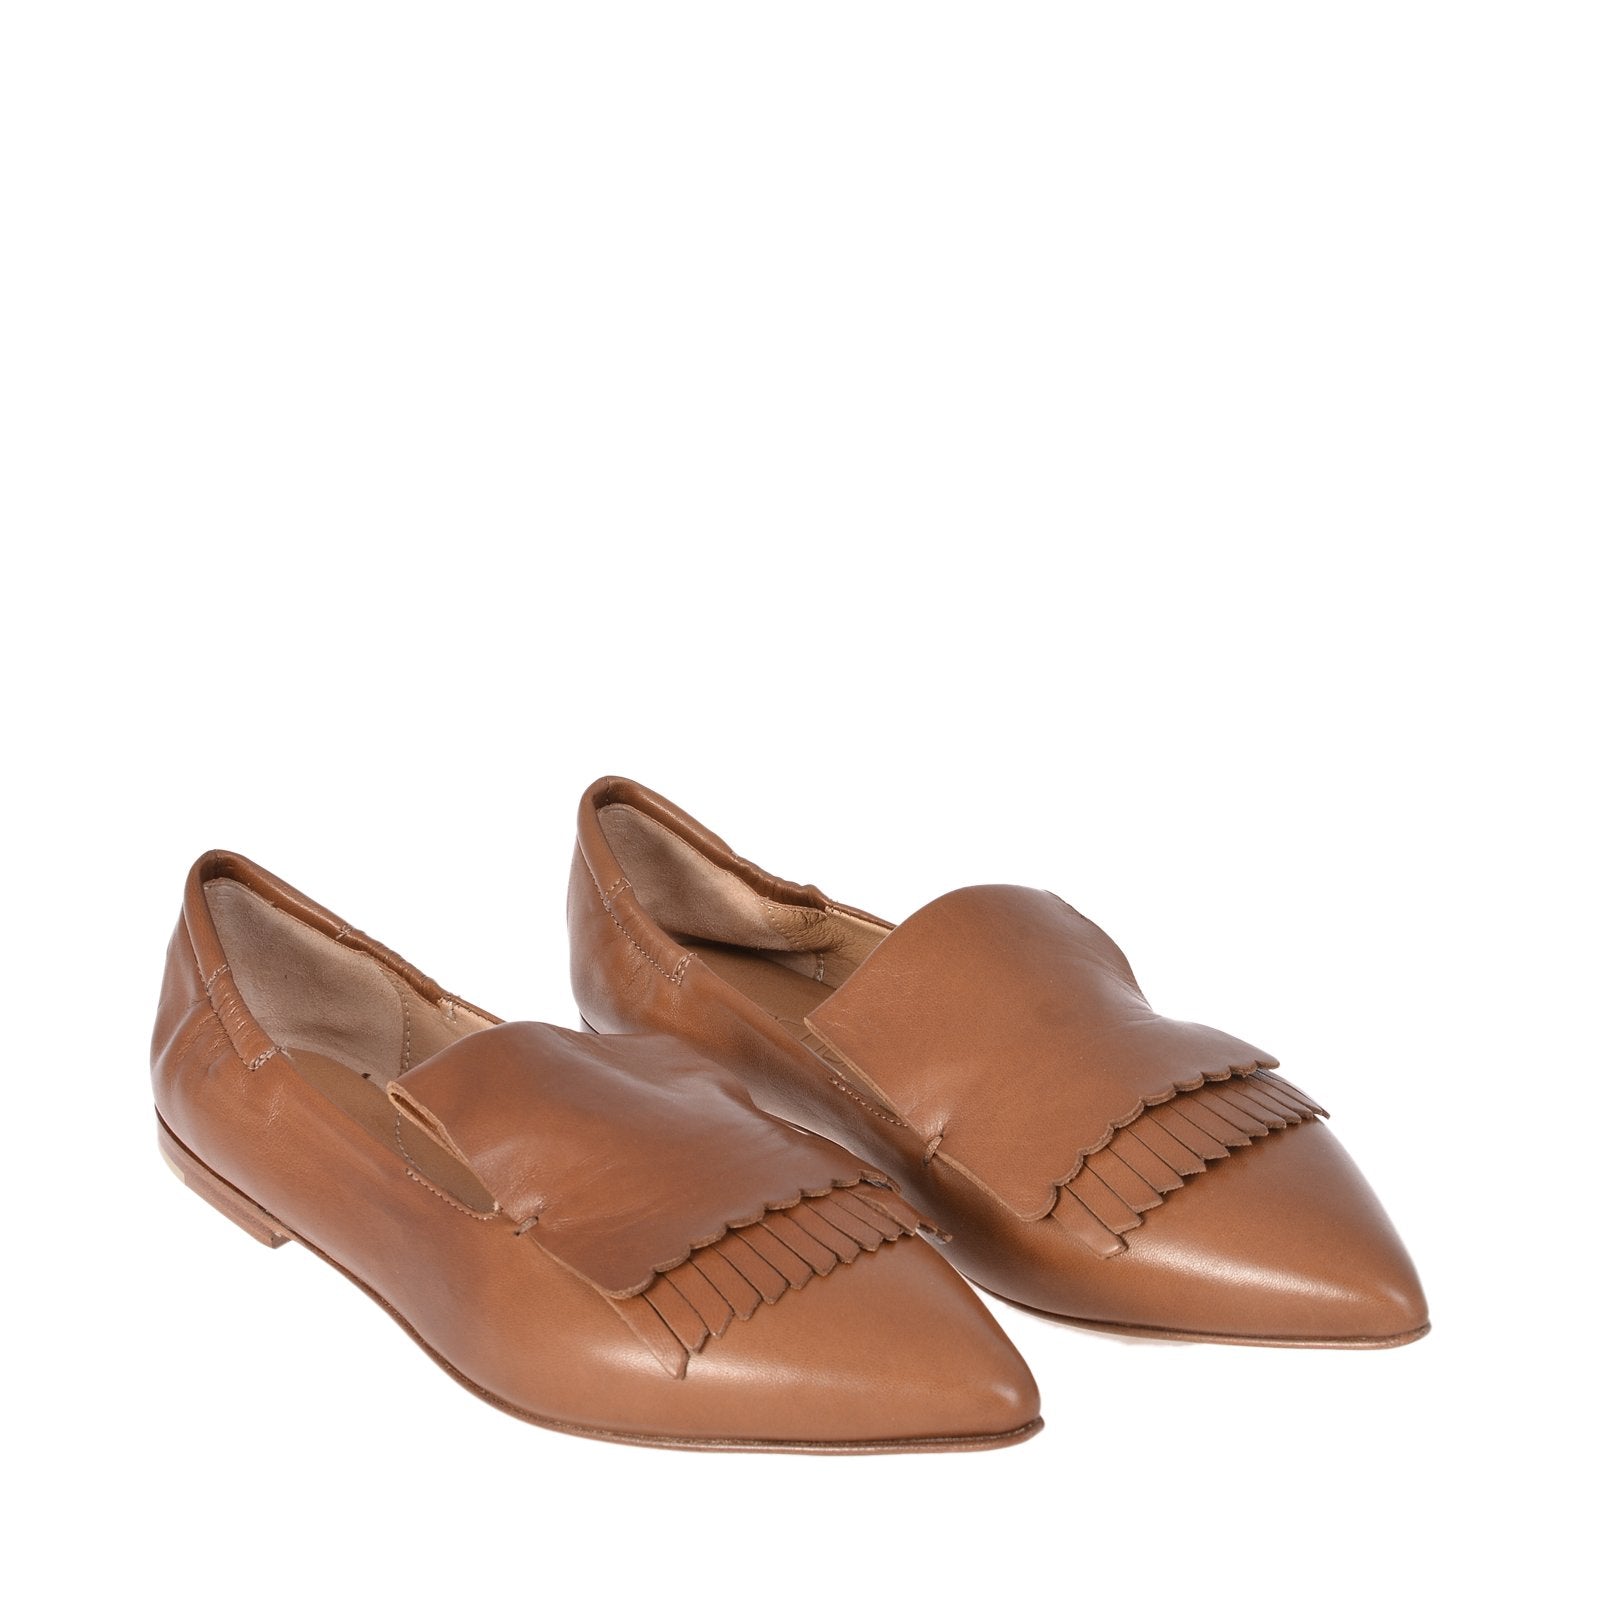 Grace Caramel Leather Loafers Flats 1744B-CARAMEL - 2